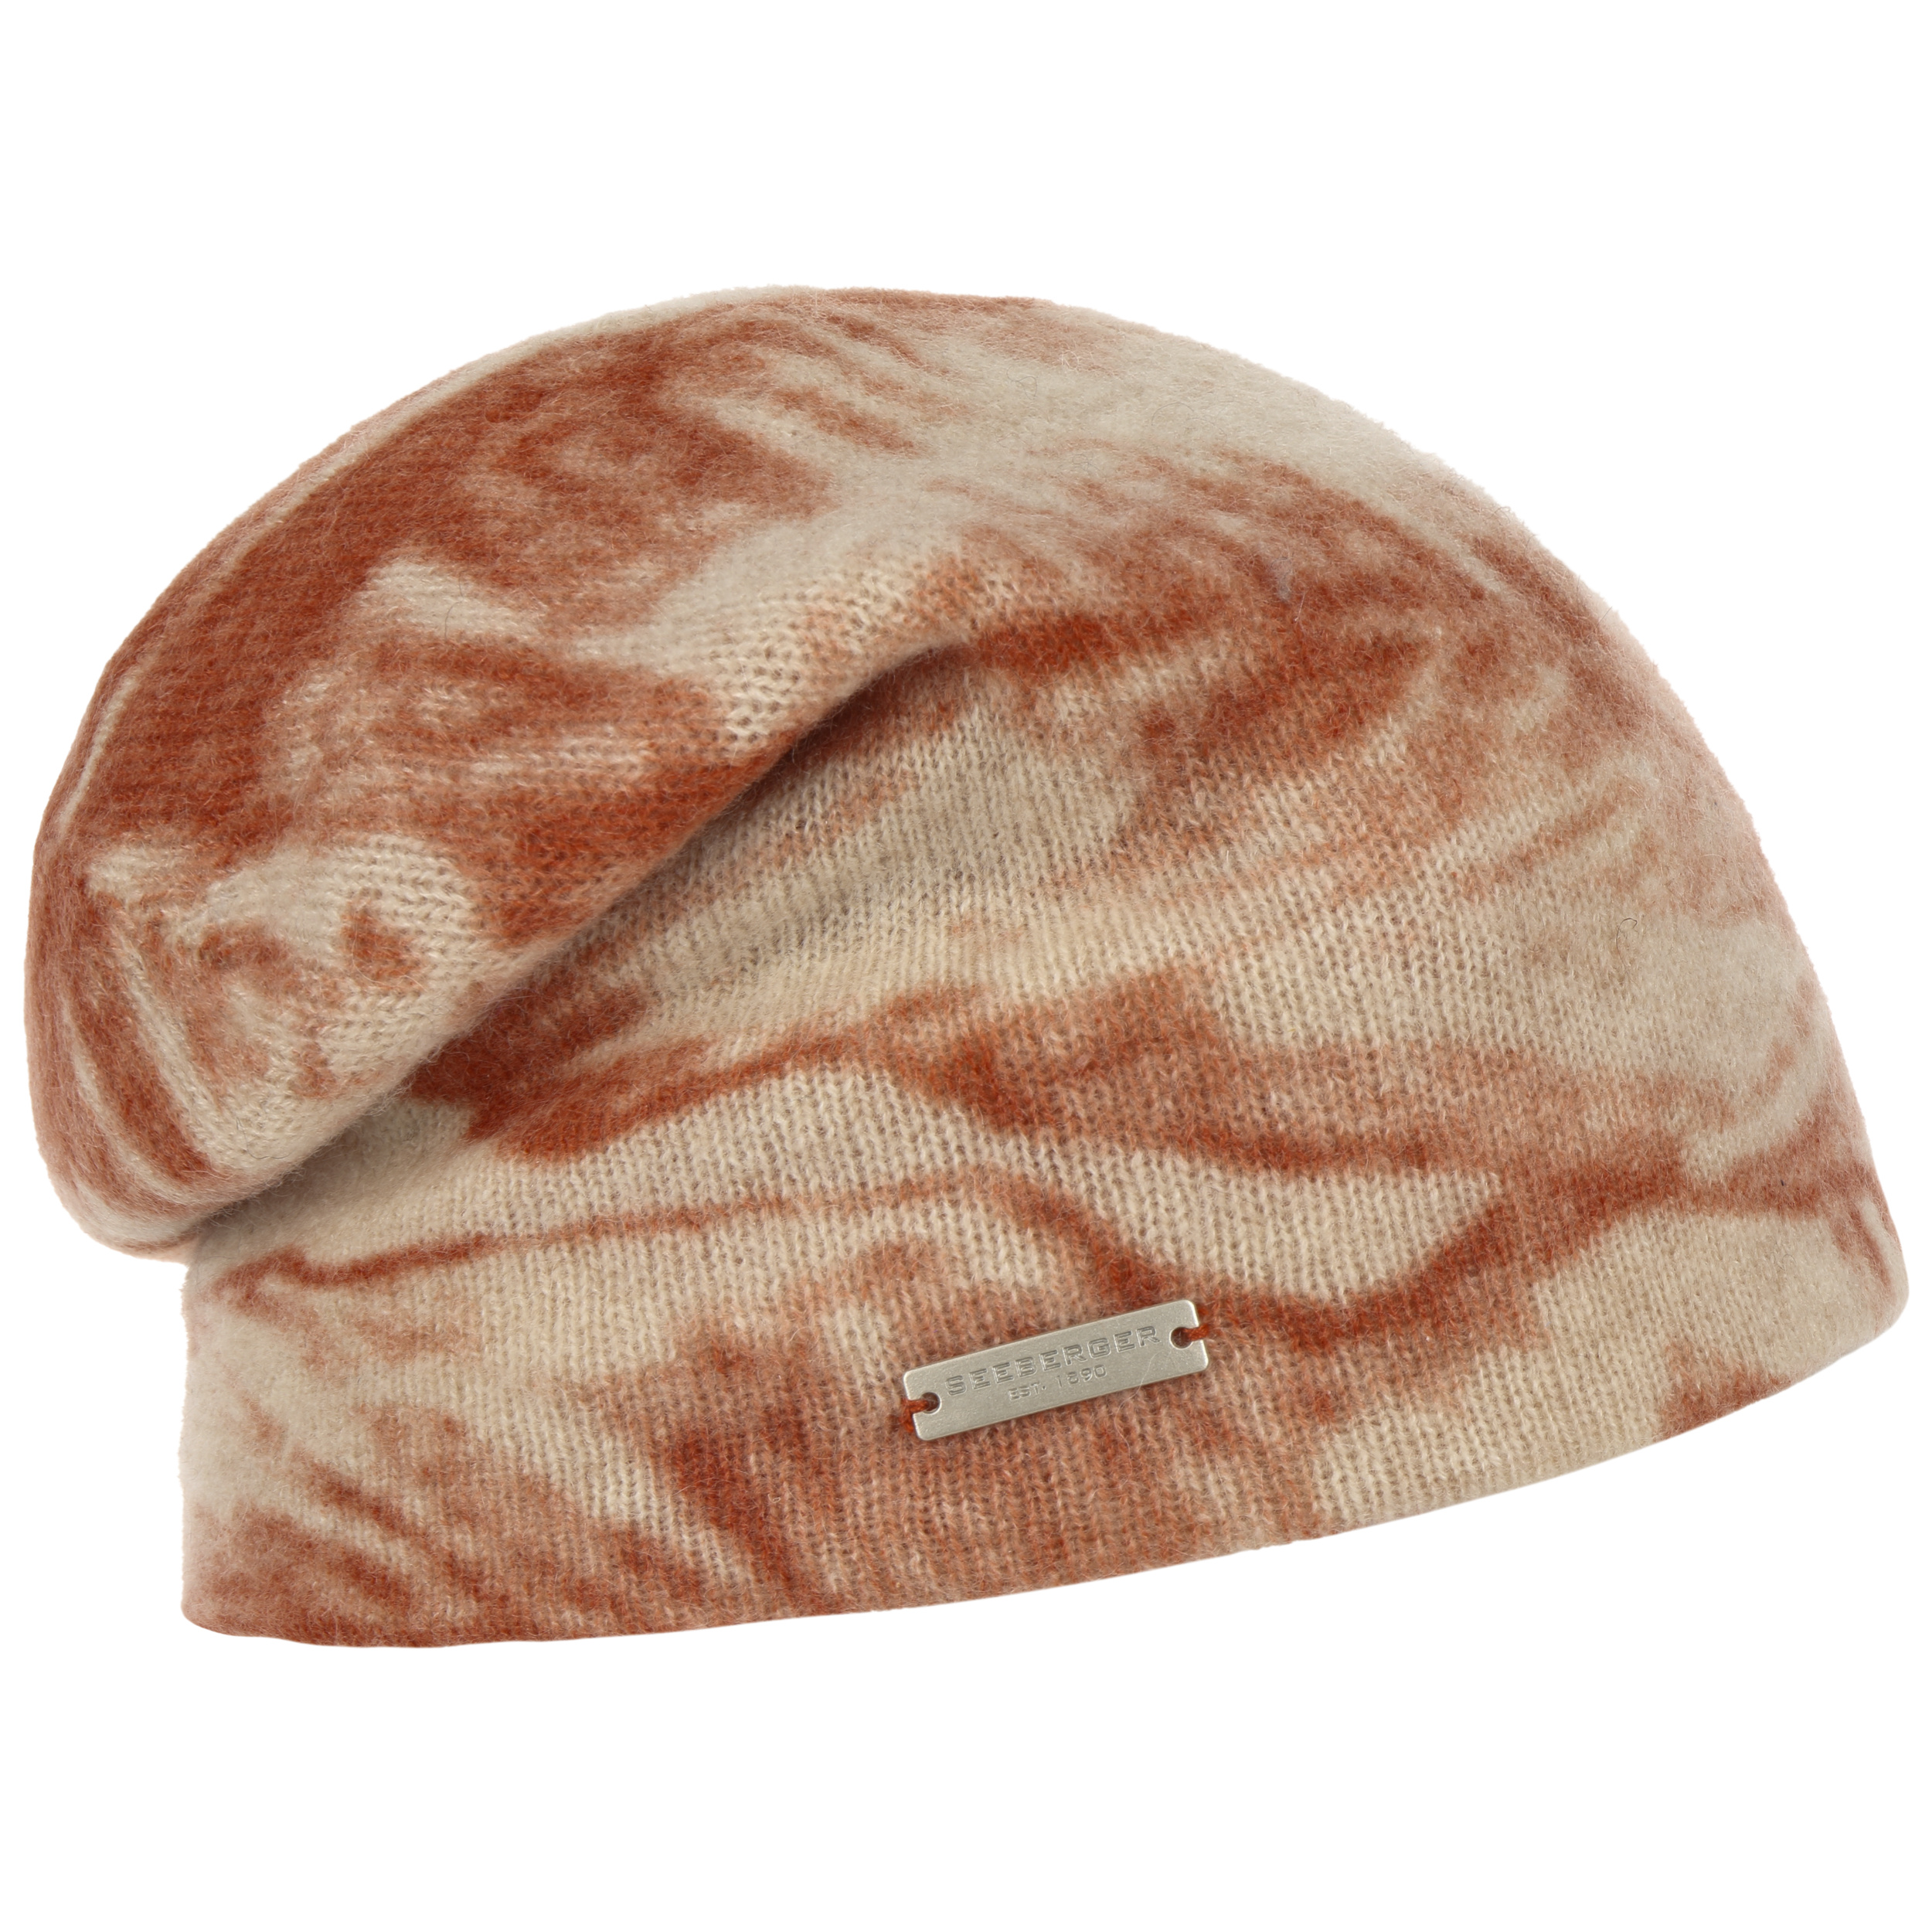 Mariella Cashmere Beanie Hat by Seeberger - 82,95 £